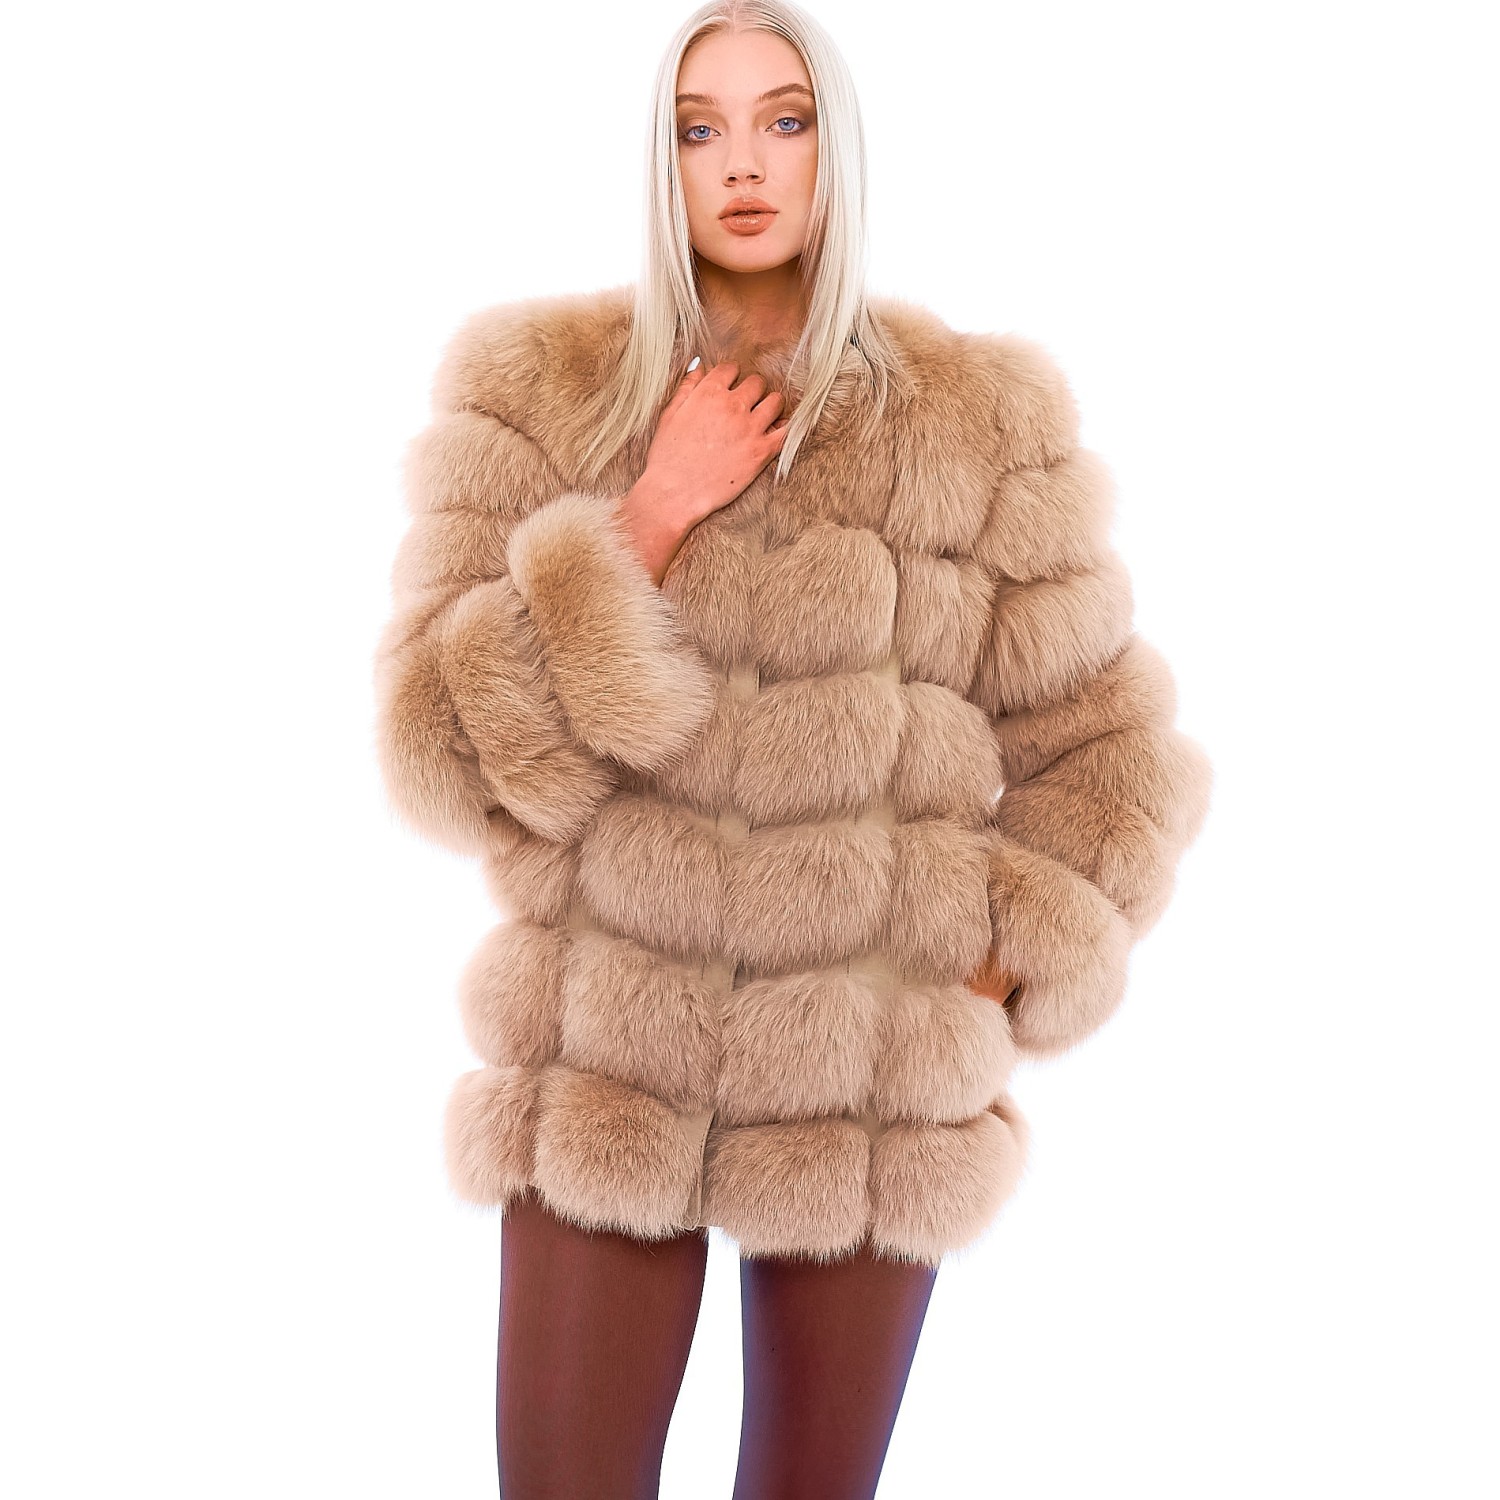 Fox Fur Jacket „Vogue“ in Caramel, Ladiesvest, Girlsjacket, Furjacket